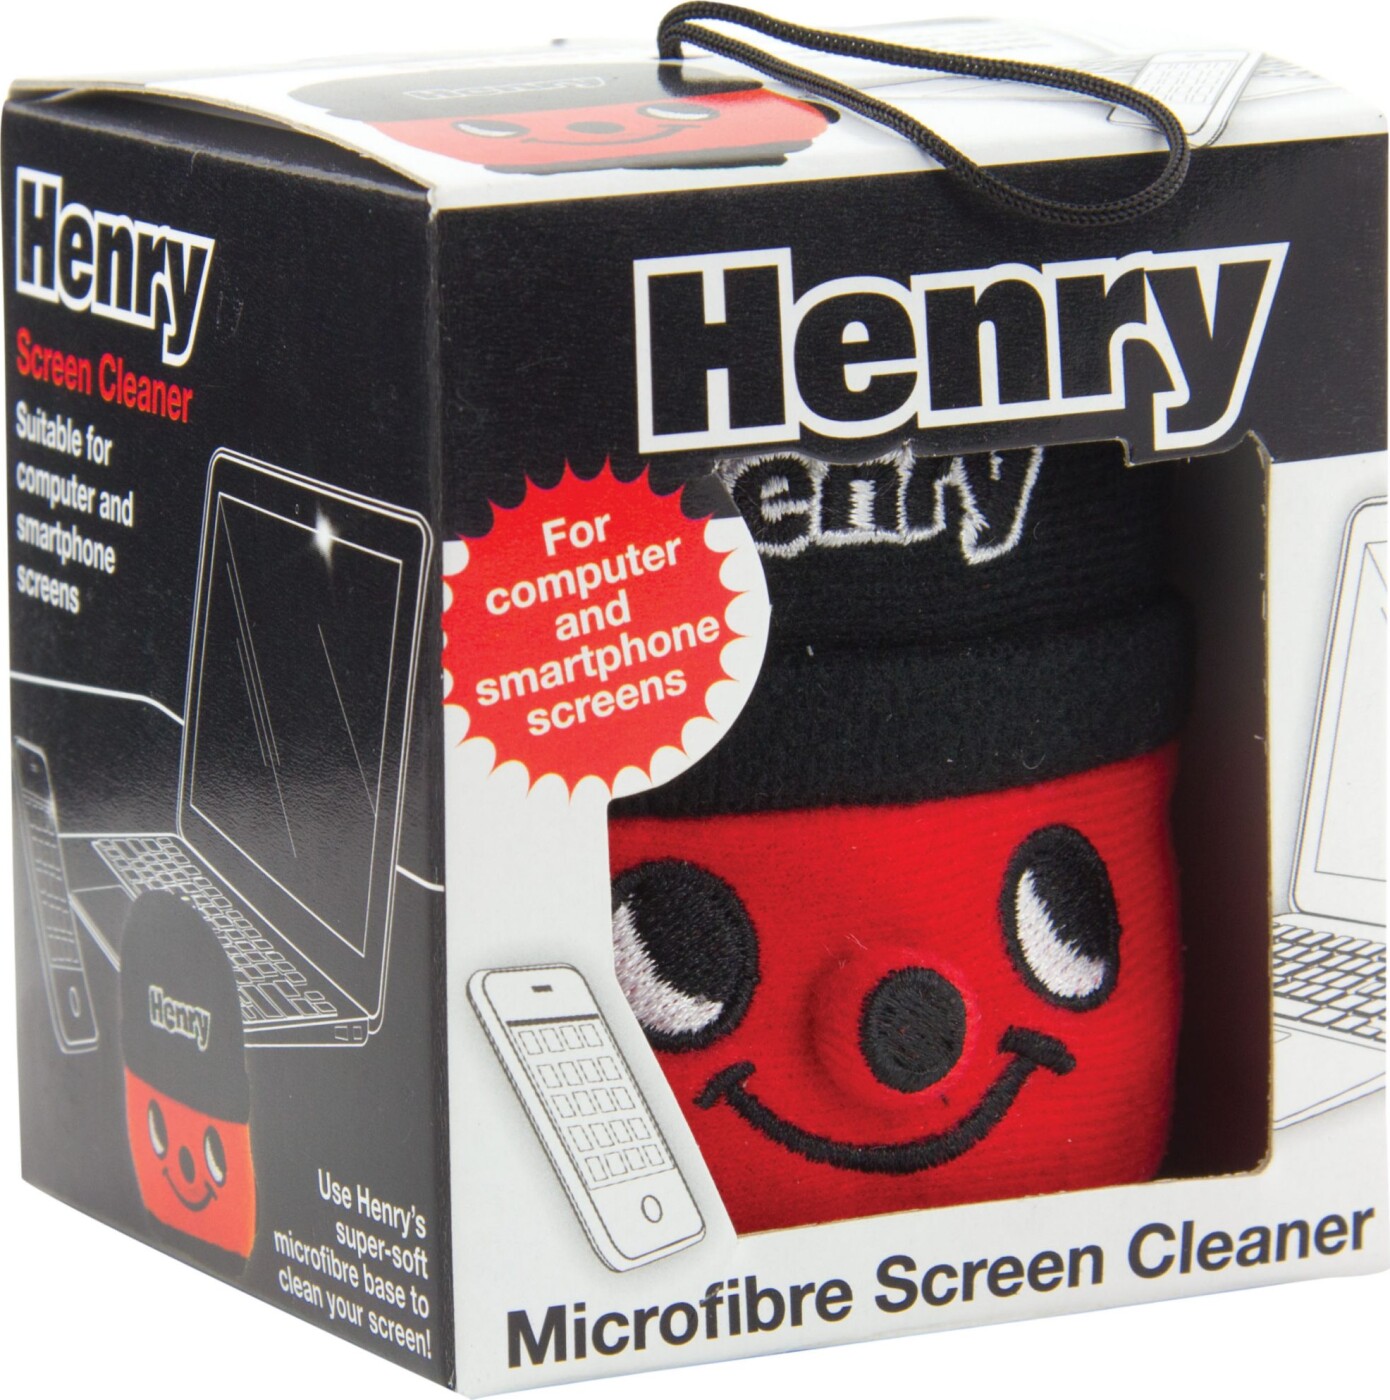 Se Henry Microfibre Screen Cleaner hos Gucca.dk